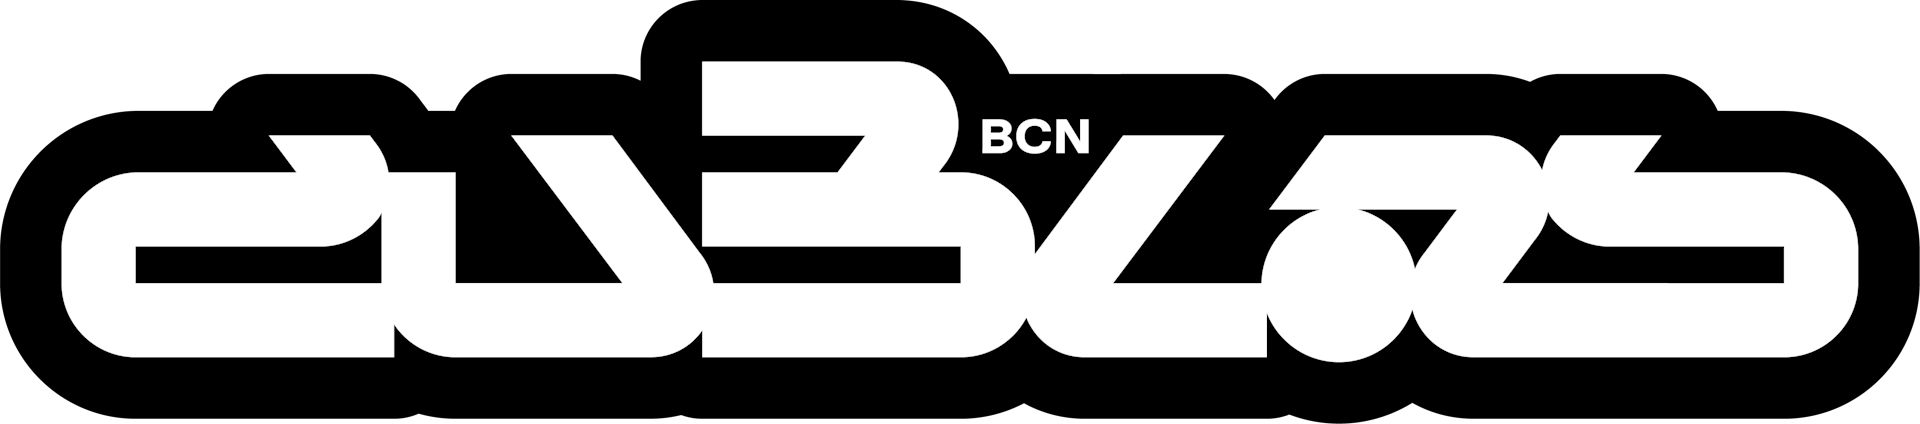 dublab Barcelona logo